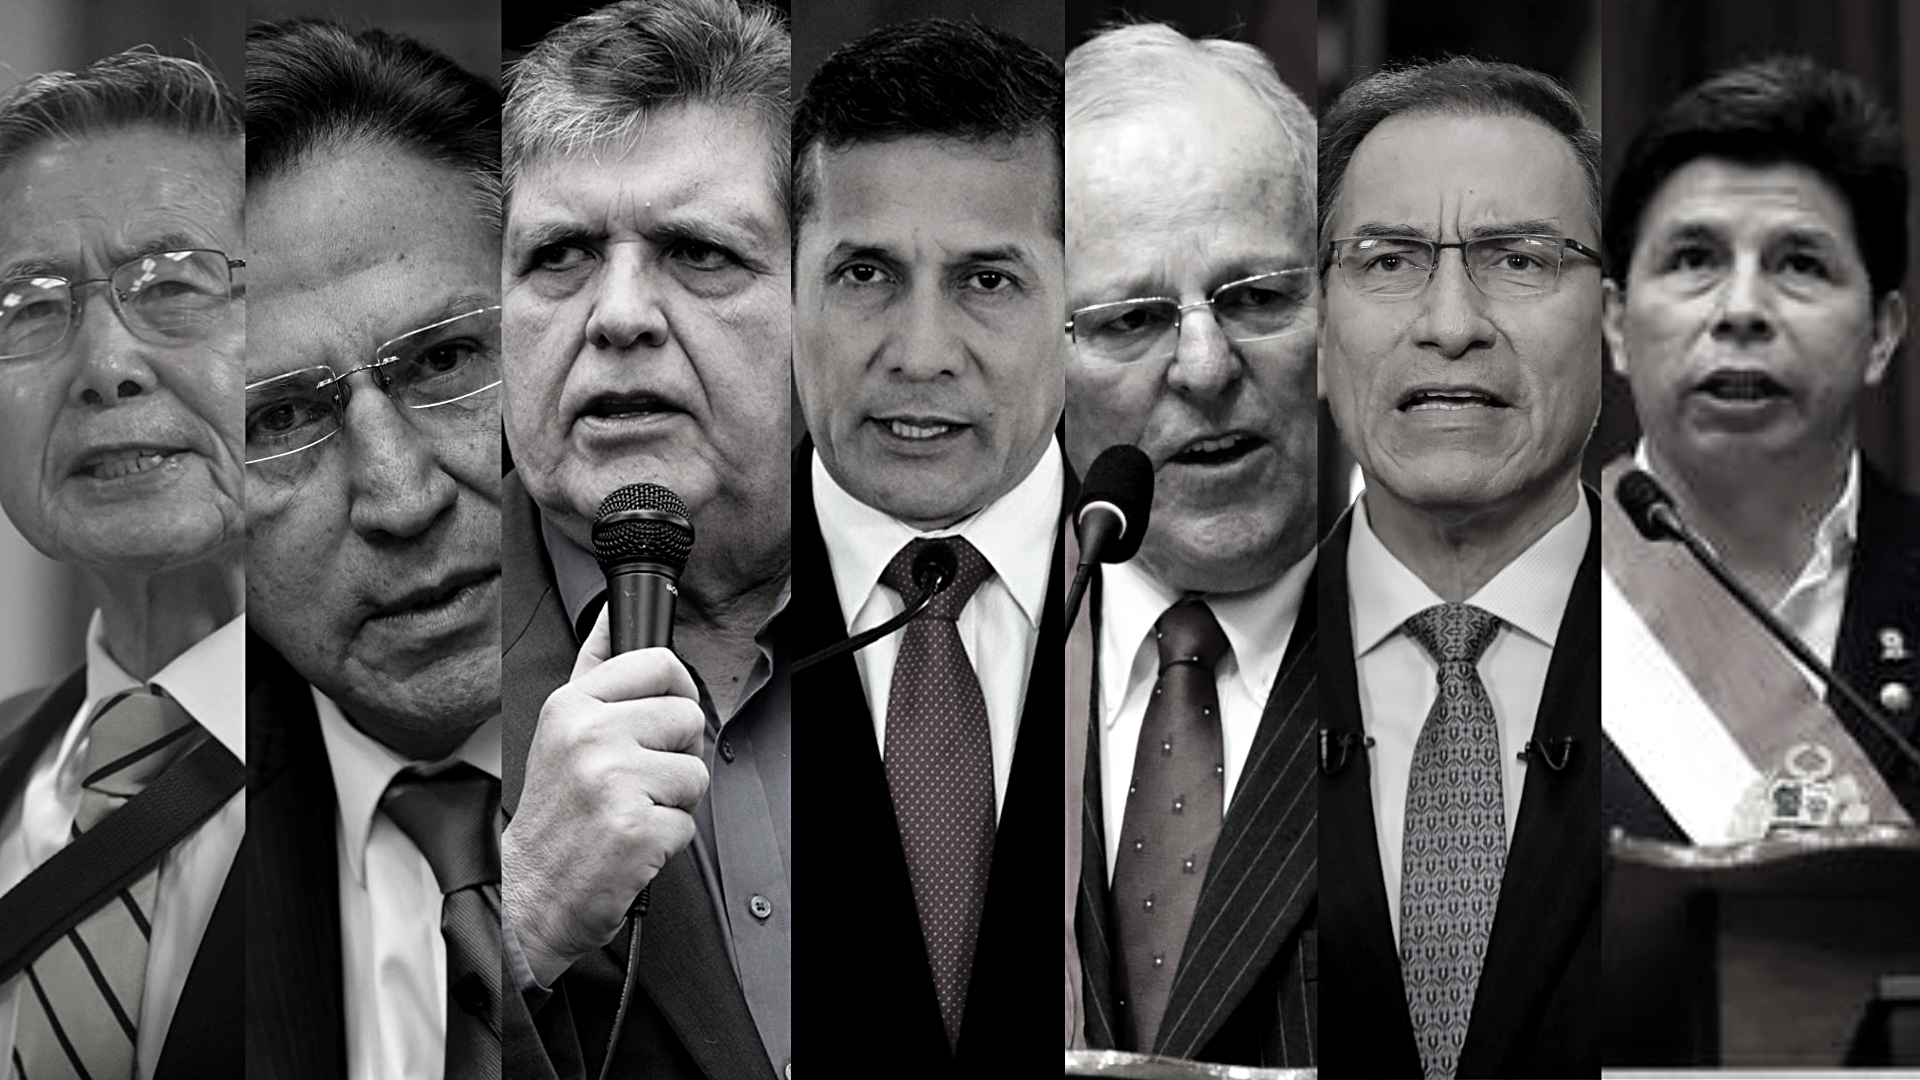 Seven former presidents of Peru investigated for corruption cases.